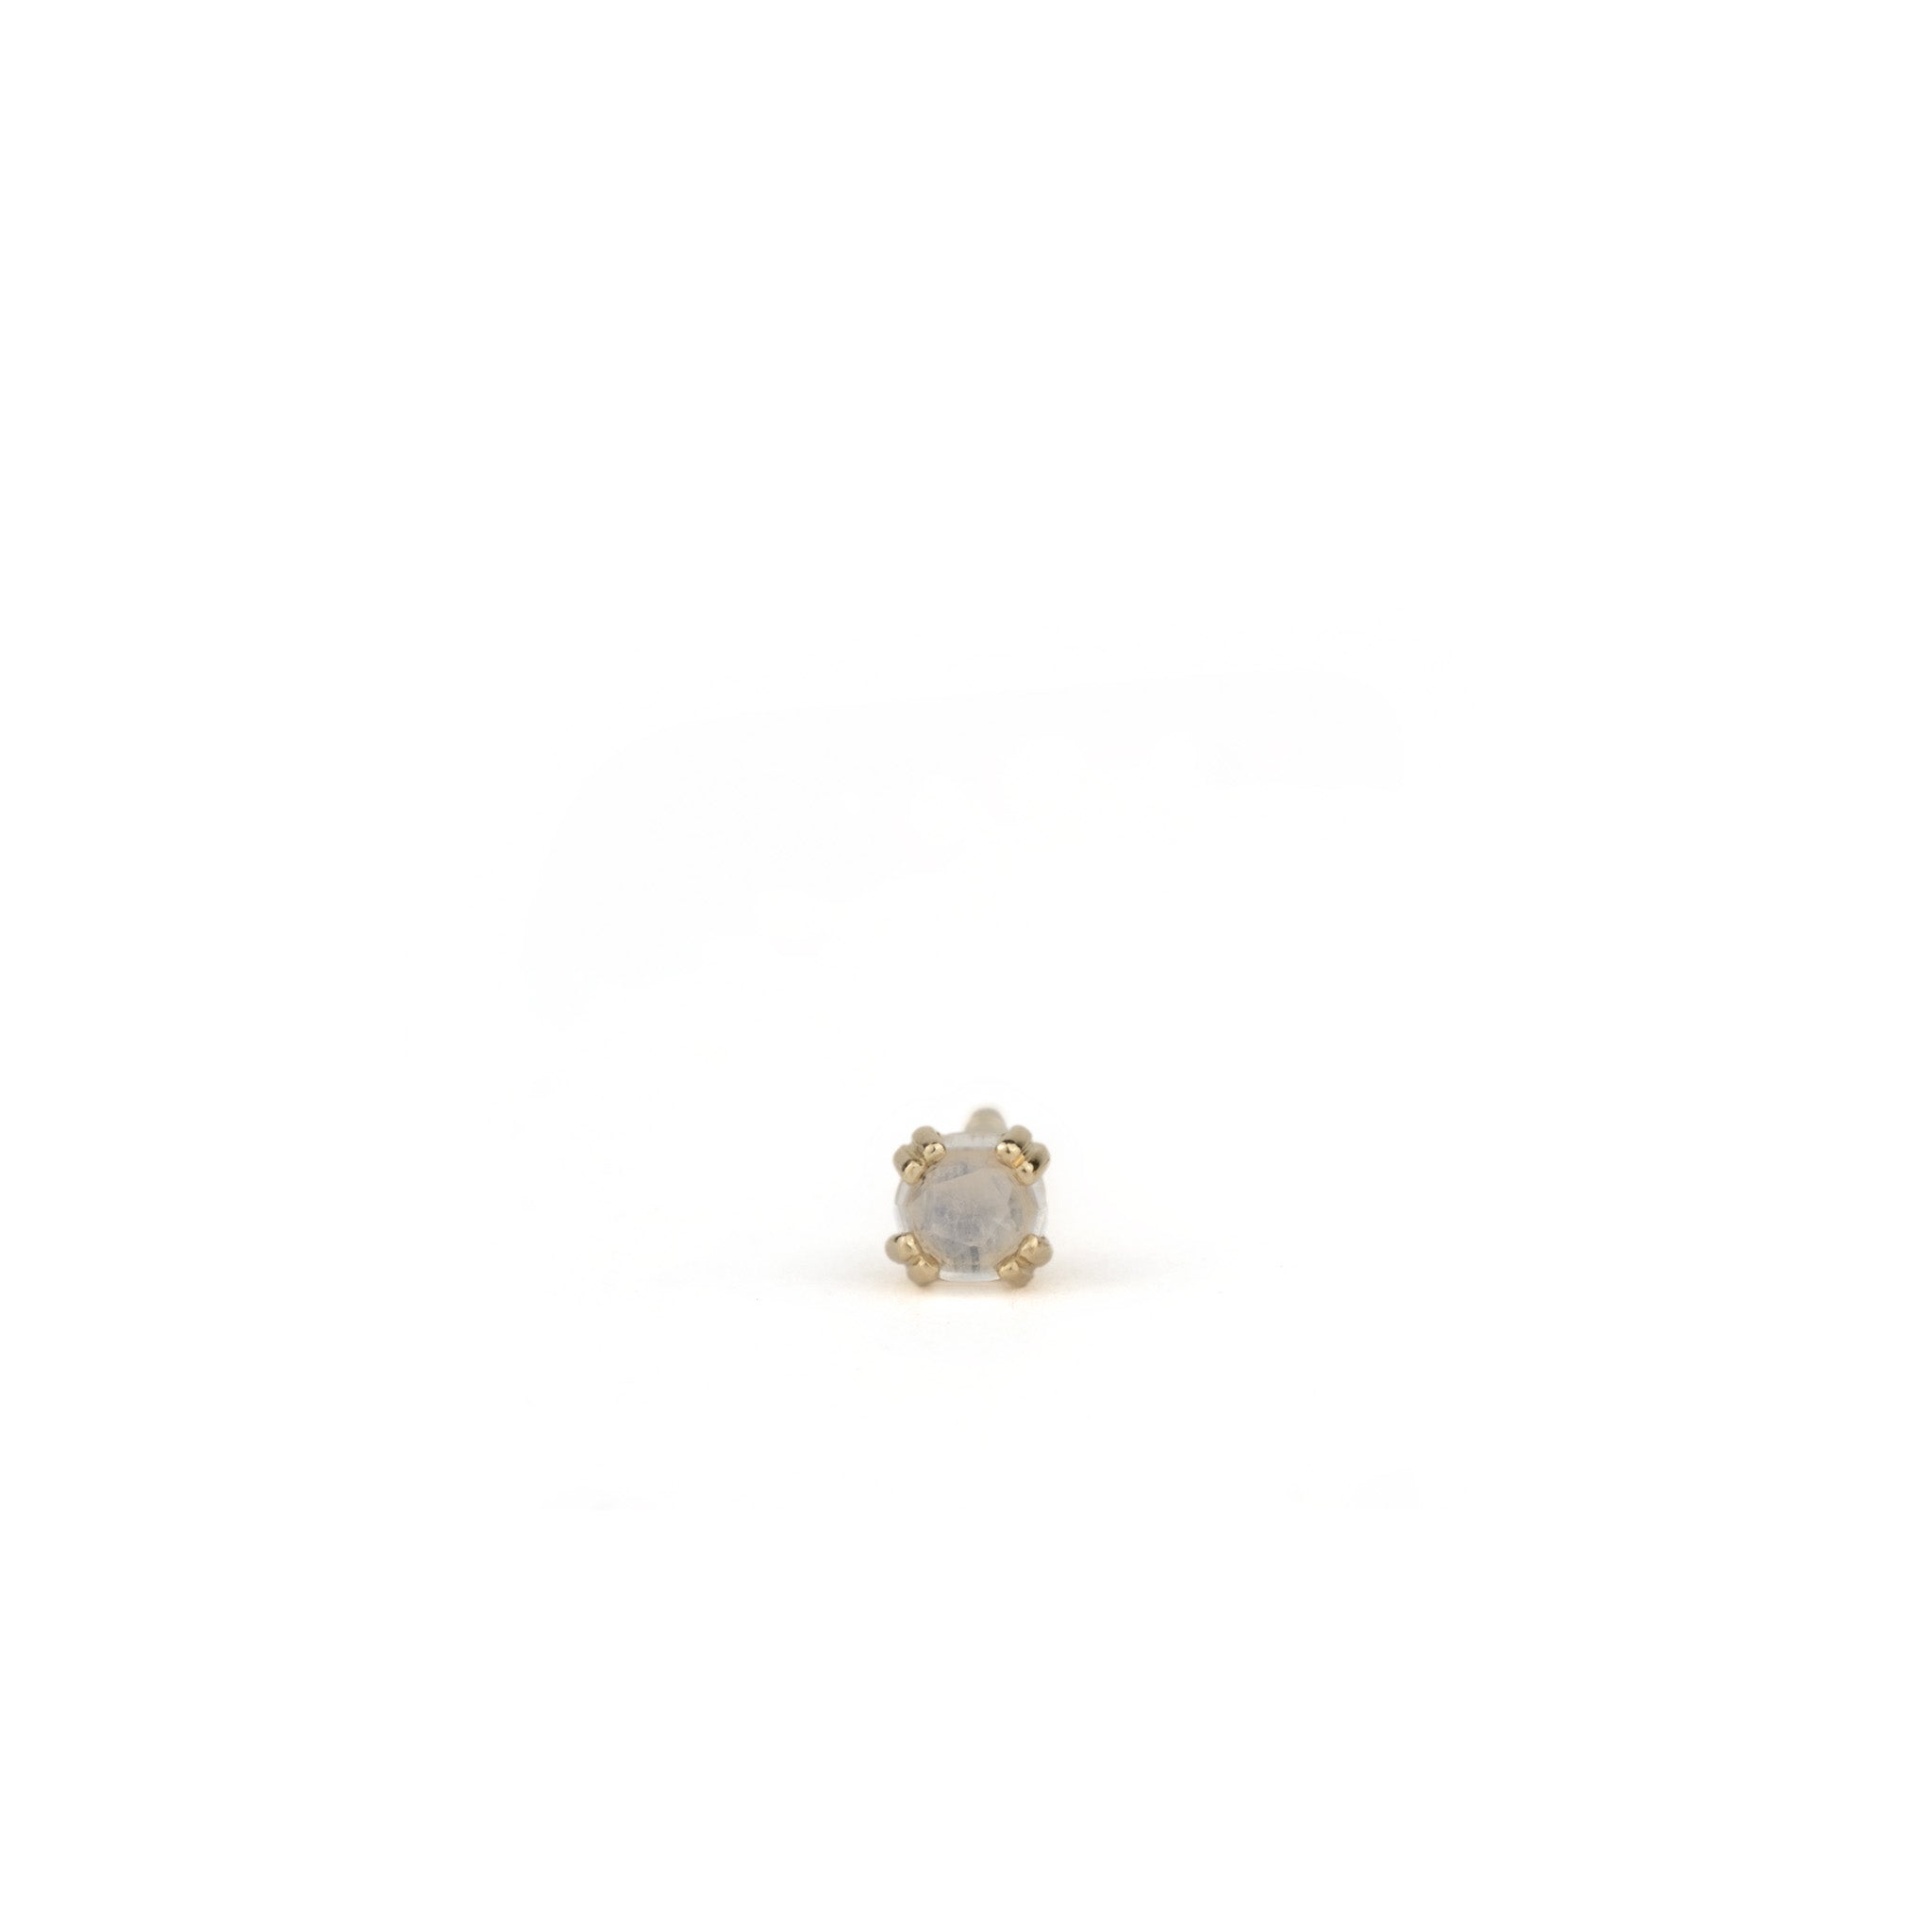 An Aiden Jae Moonlight Stud diamond ring on a white background.